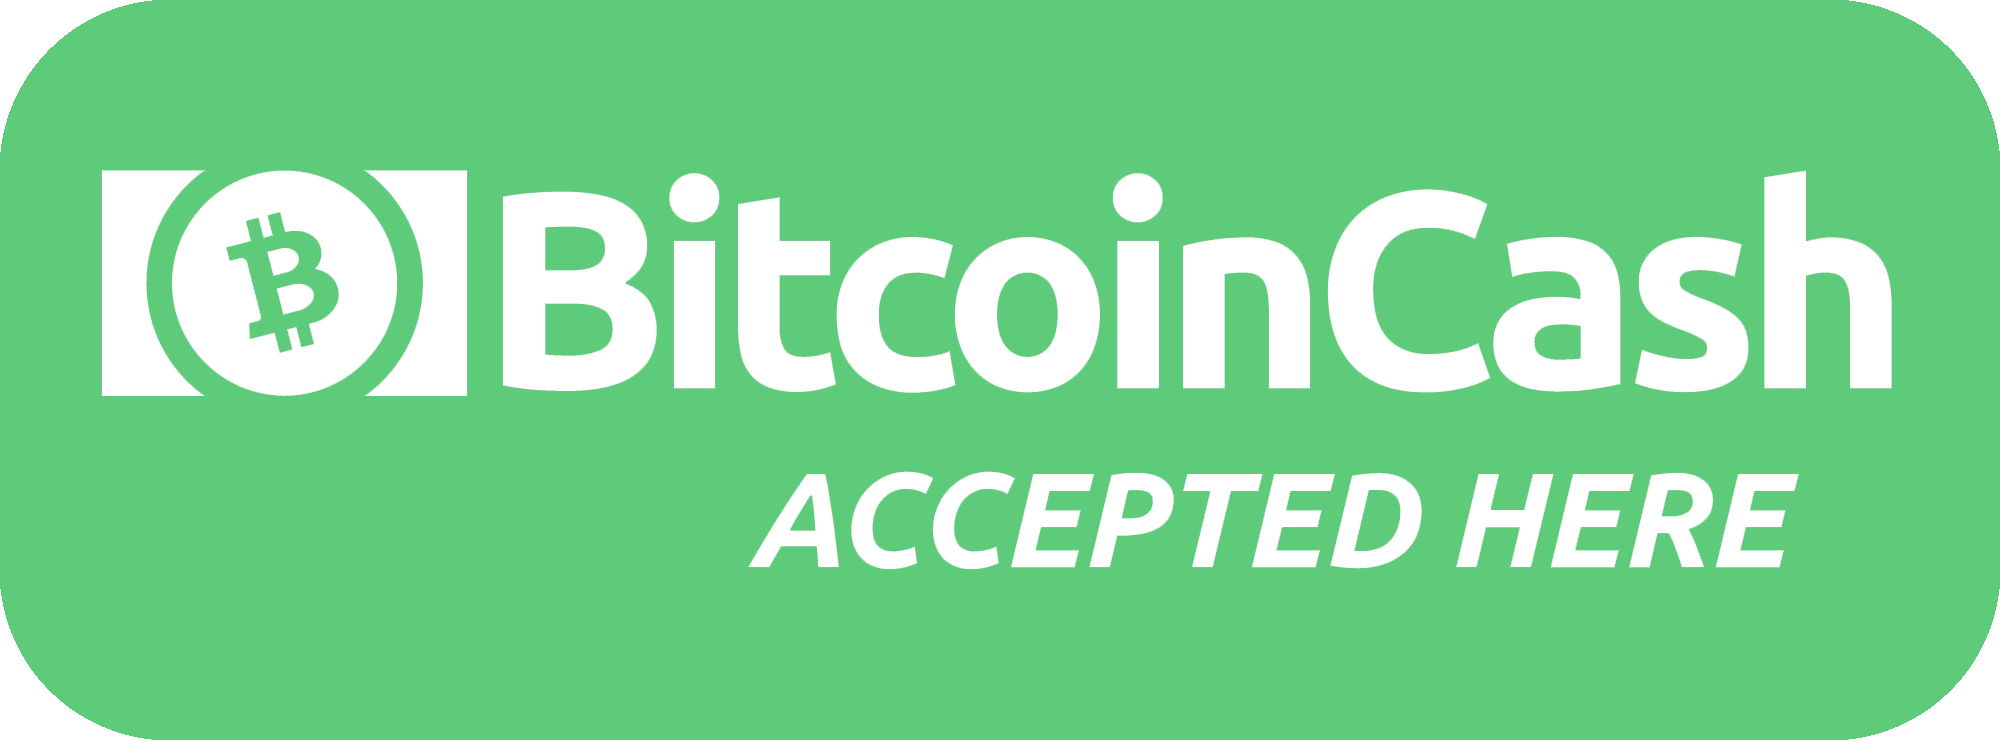 8 Green Logo - Bitcoin.com | Bitcoin Cash Logos and Brand Assets